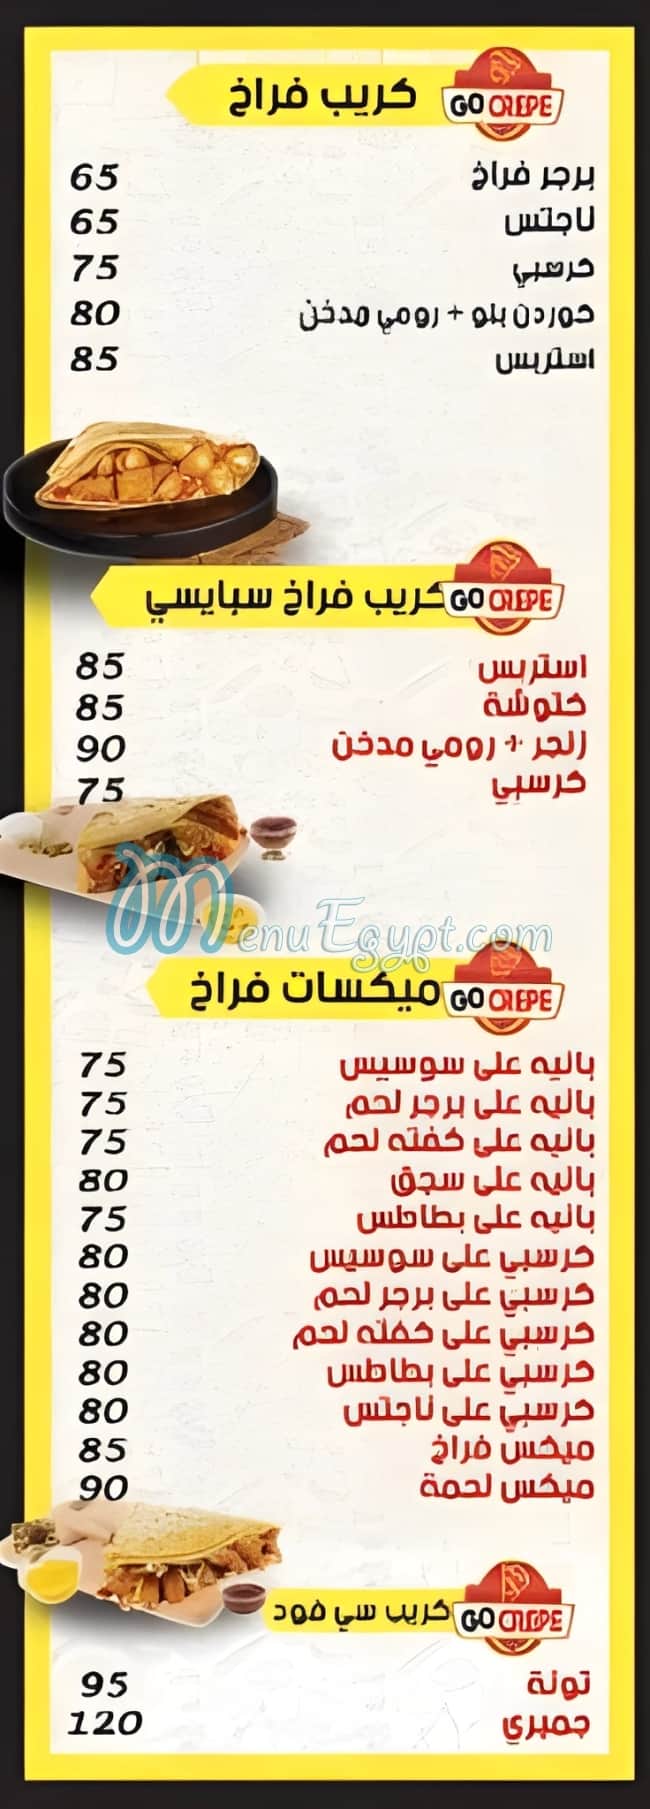 Go crepe menu Egypt 1